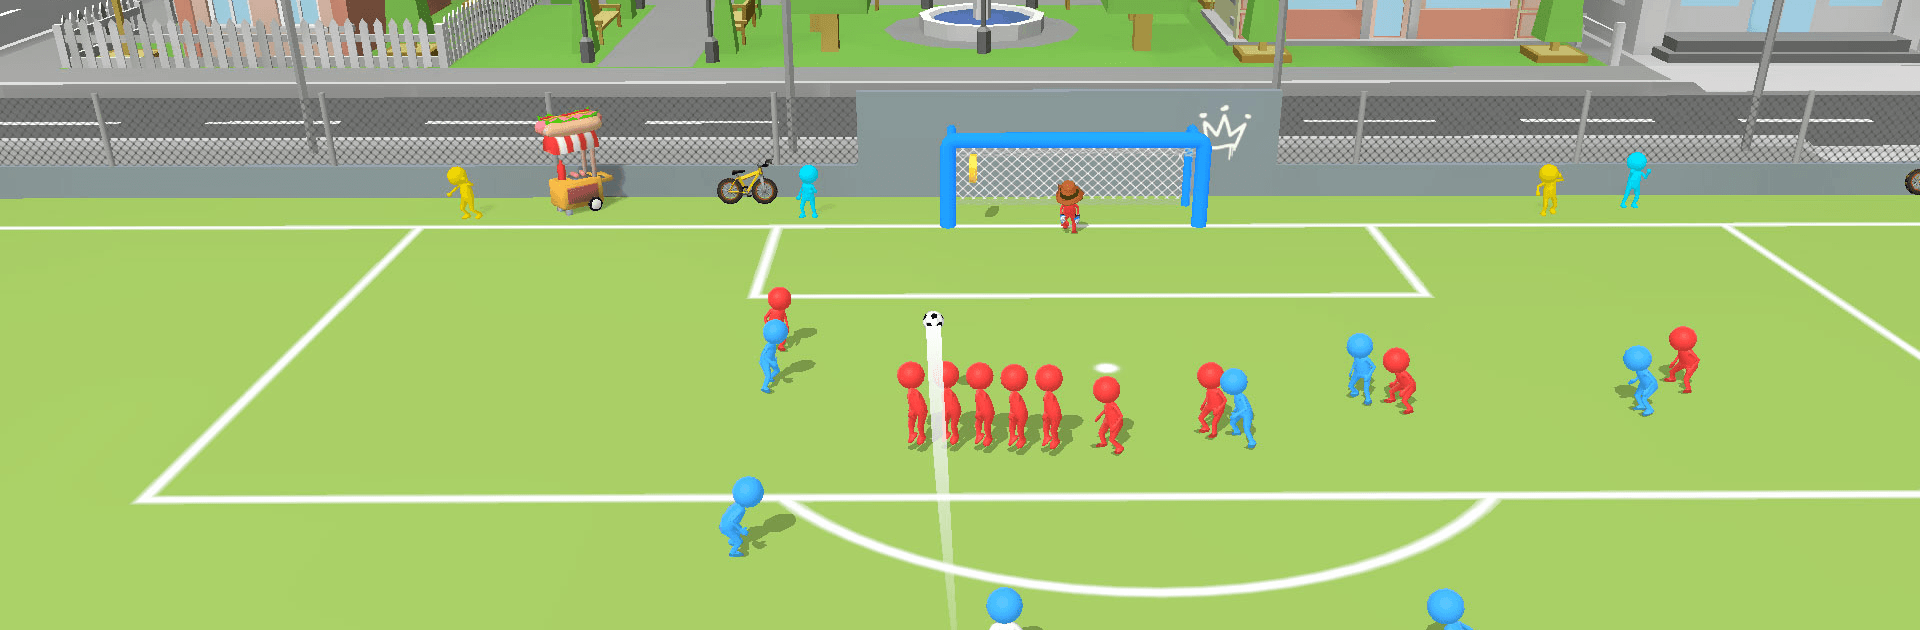 Super Goal - Avatar de Fútbol